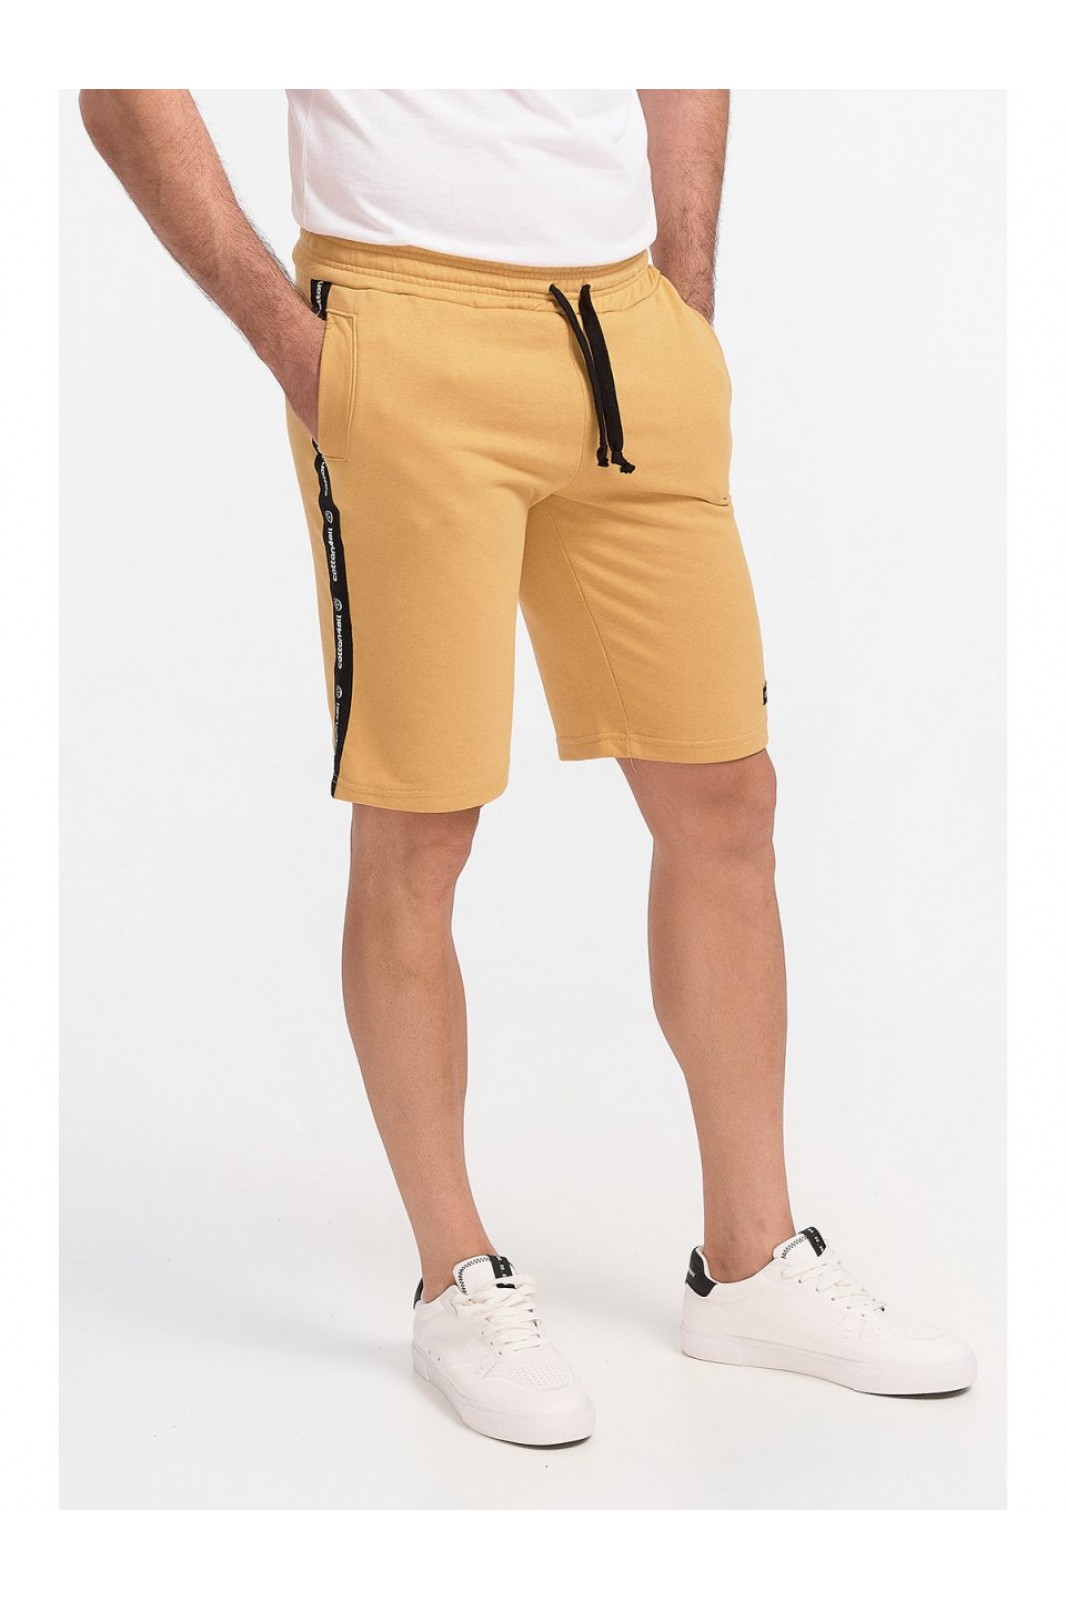 Mens bermuda shorts COTTON4ALL Logo Yolk 